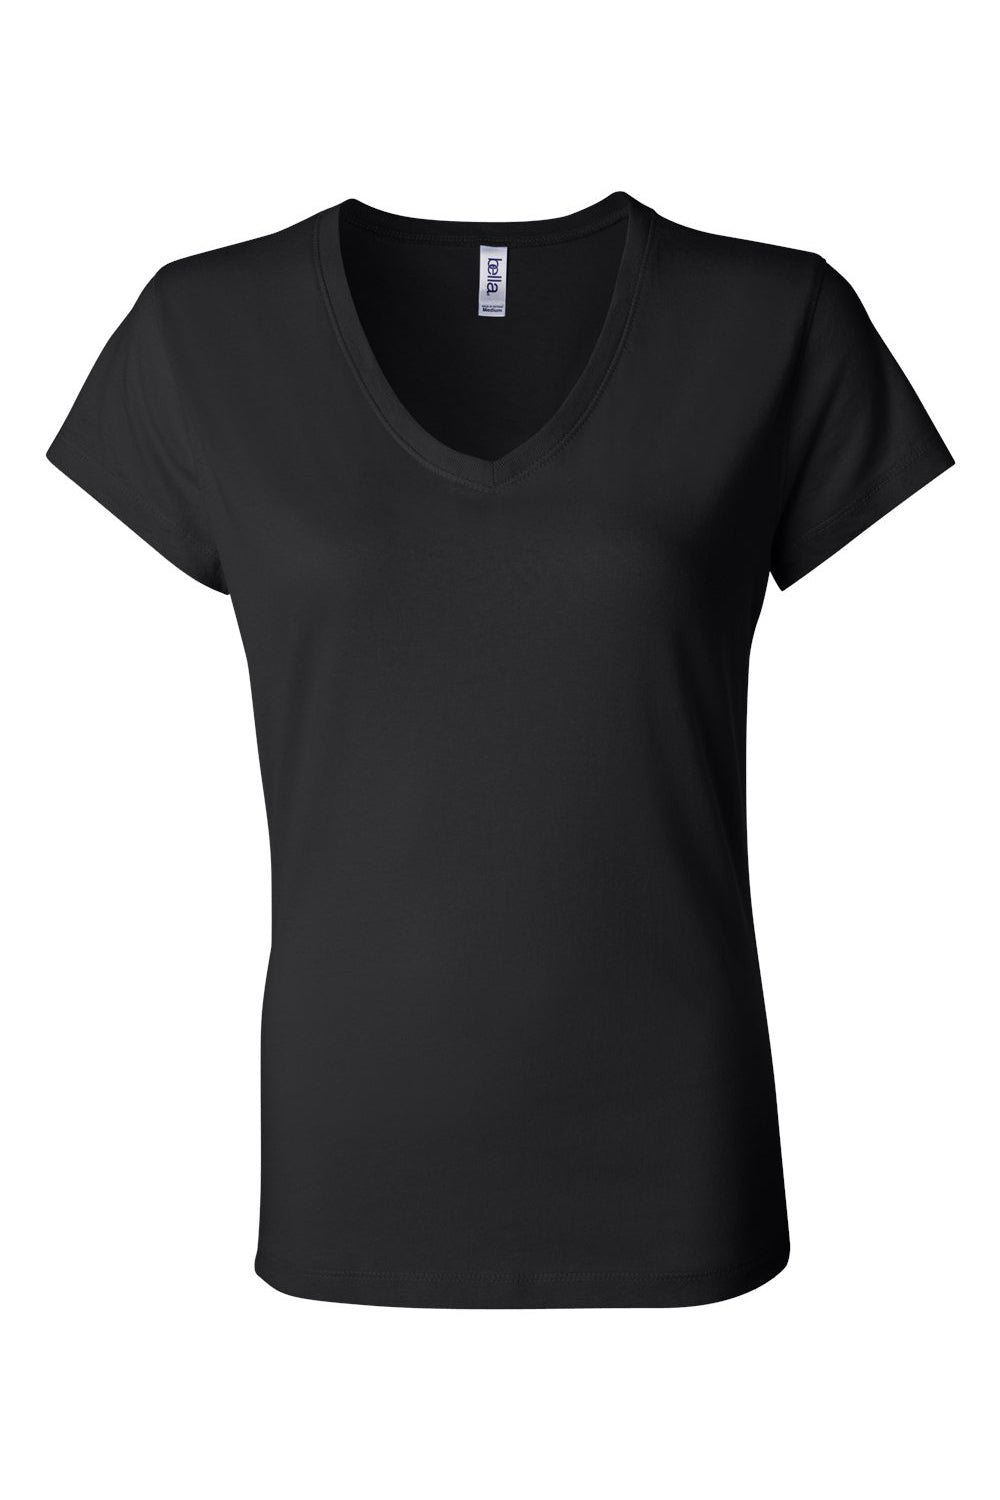 Bella + Canvas B6005/6005 Womens Jersey Short Sleeve V-Neck T-Shirt Black Flat Front